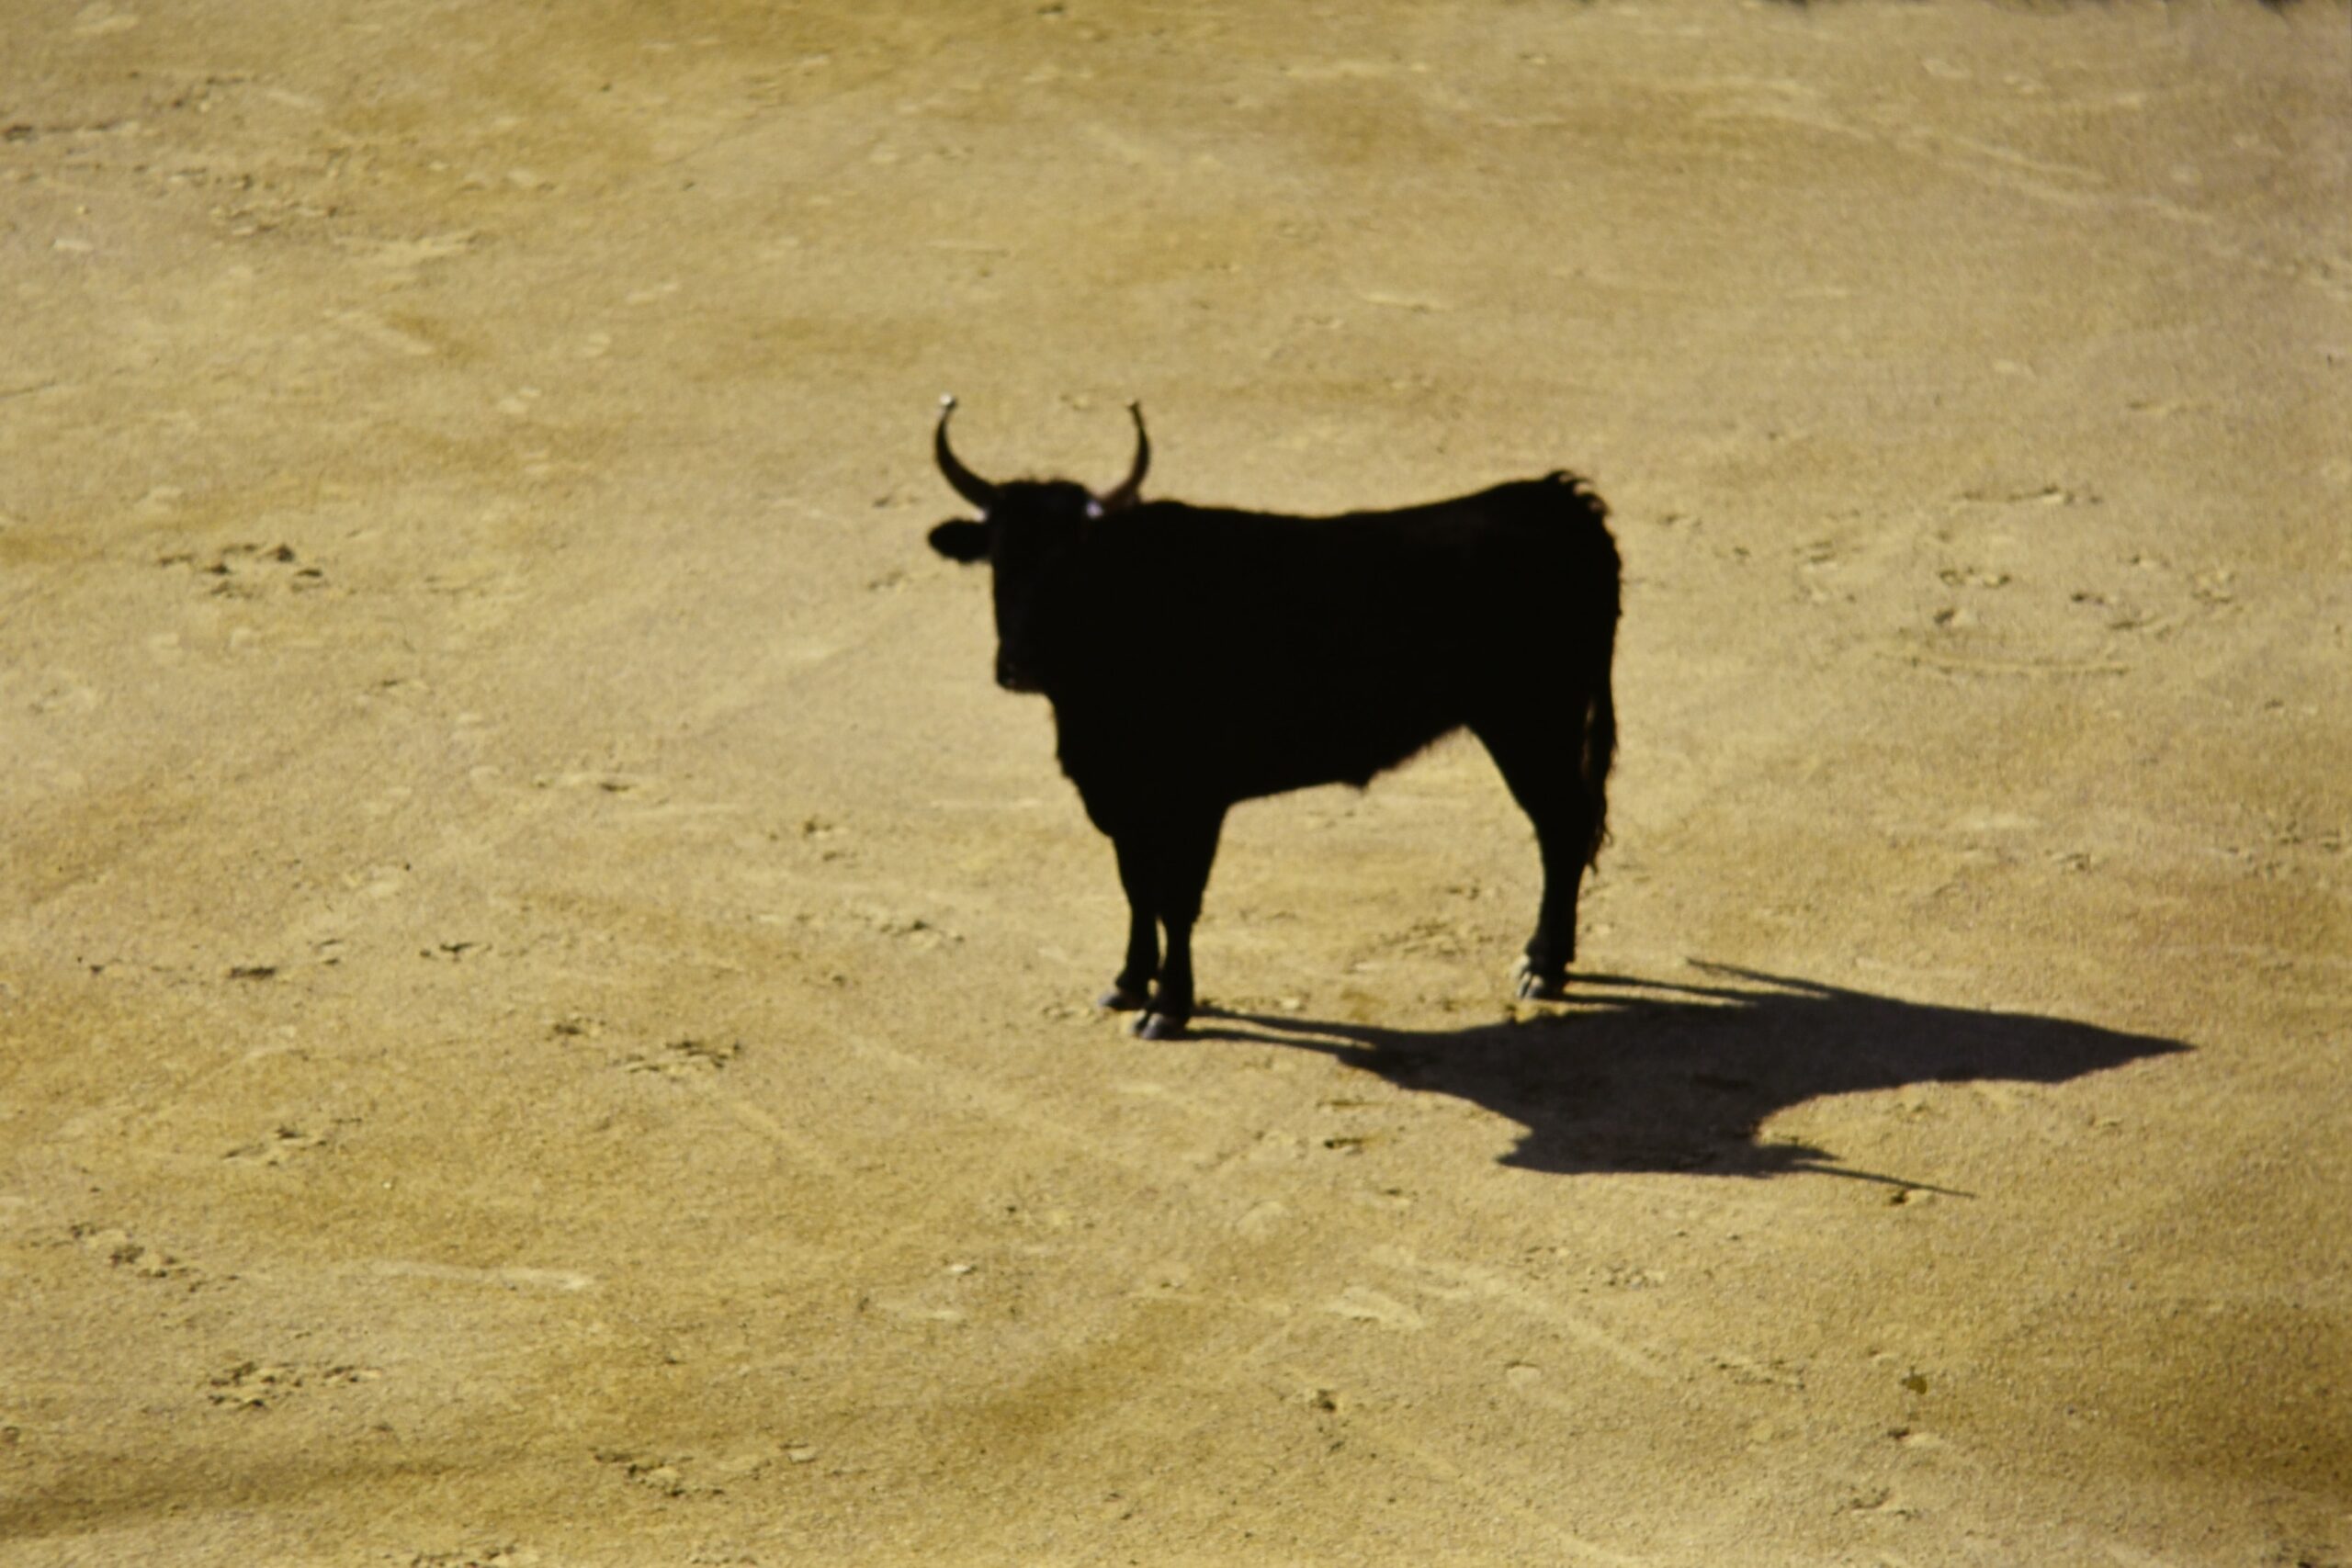 Should breeders of bulls for fighting receive EU subsidies?